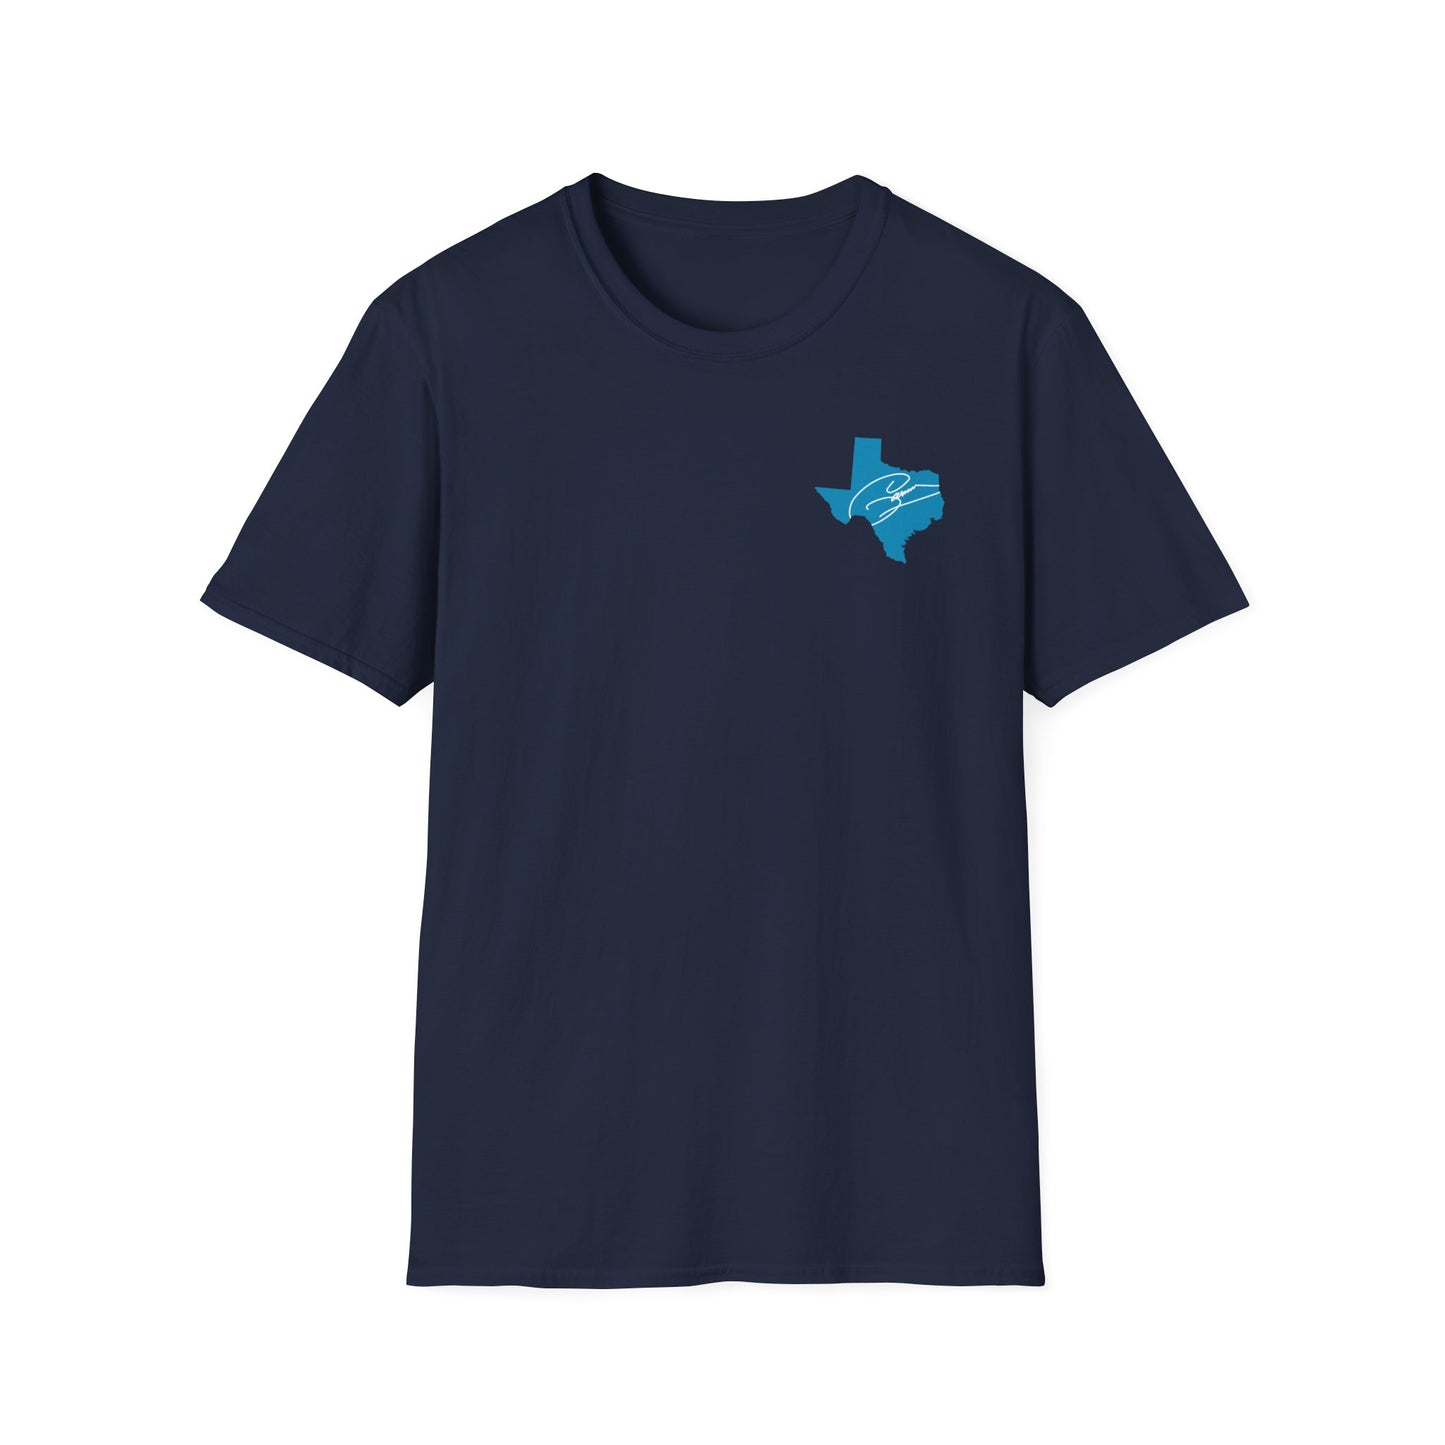 "Texas Stadium - It's History! (His Story)" - Unisex Softstyle T-Shirt